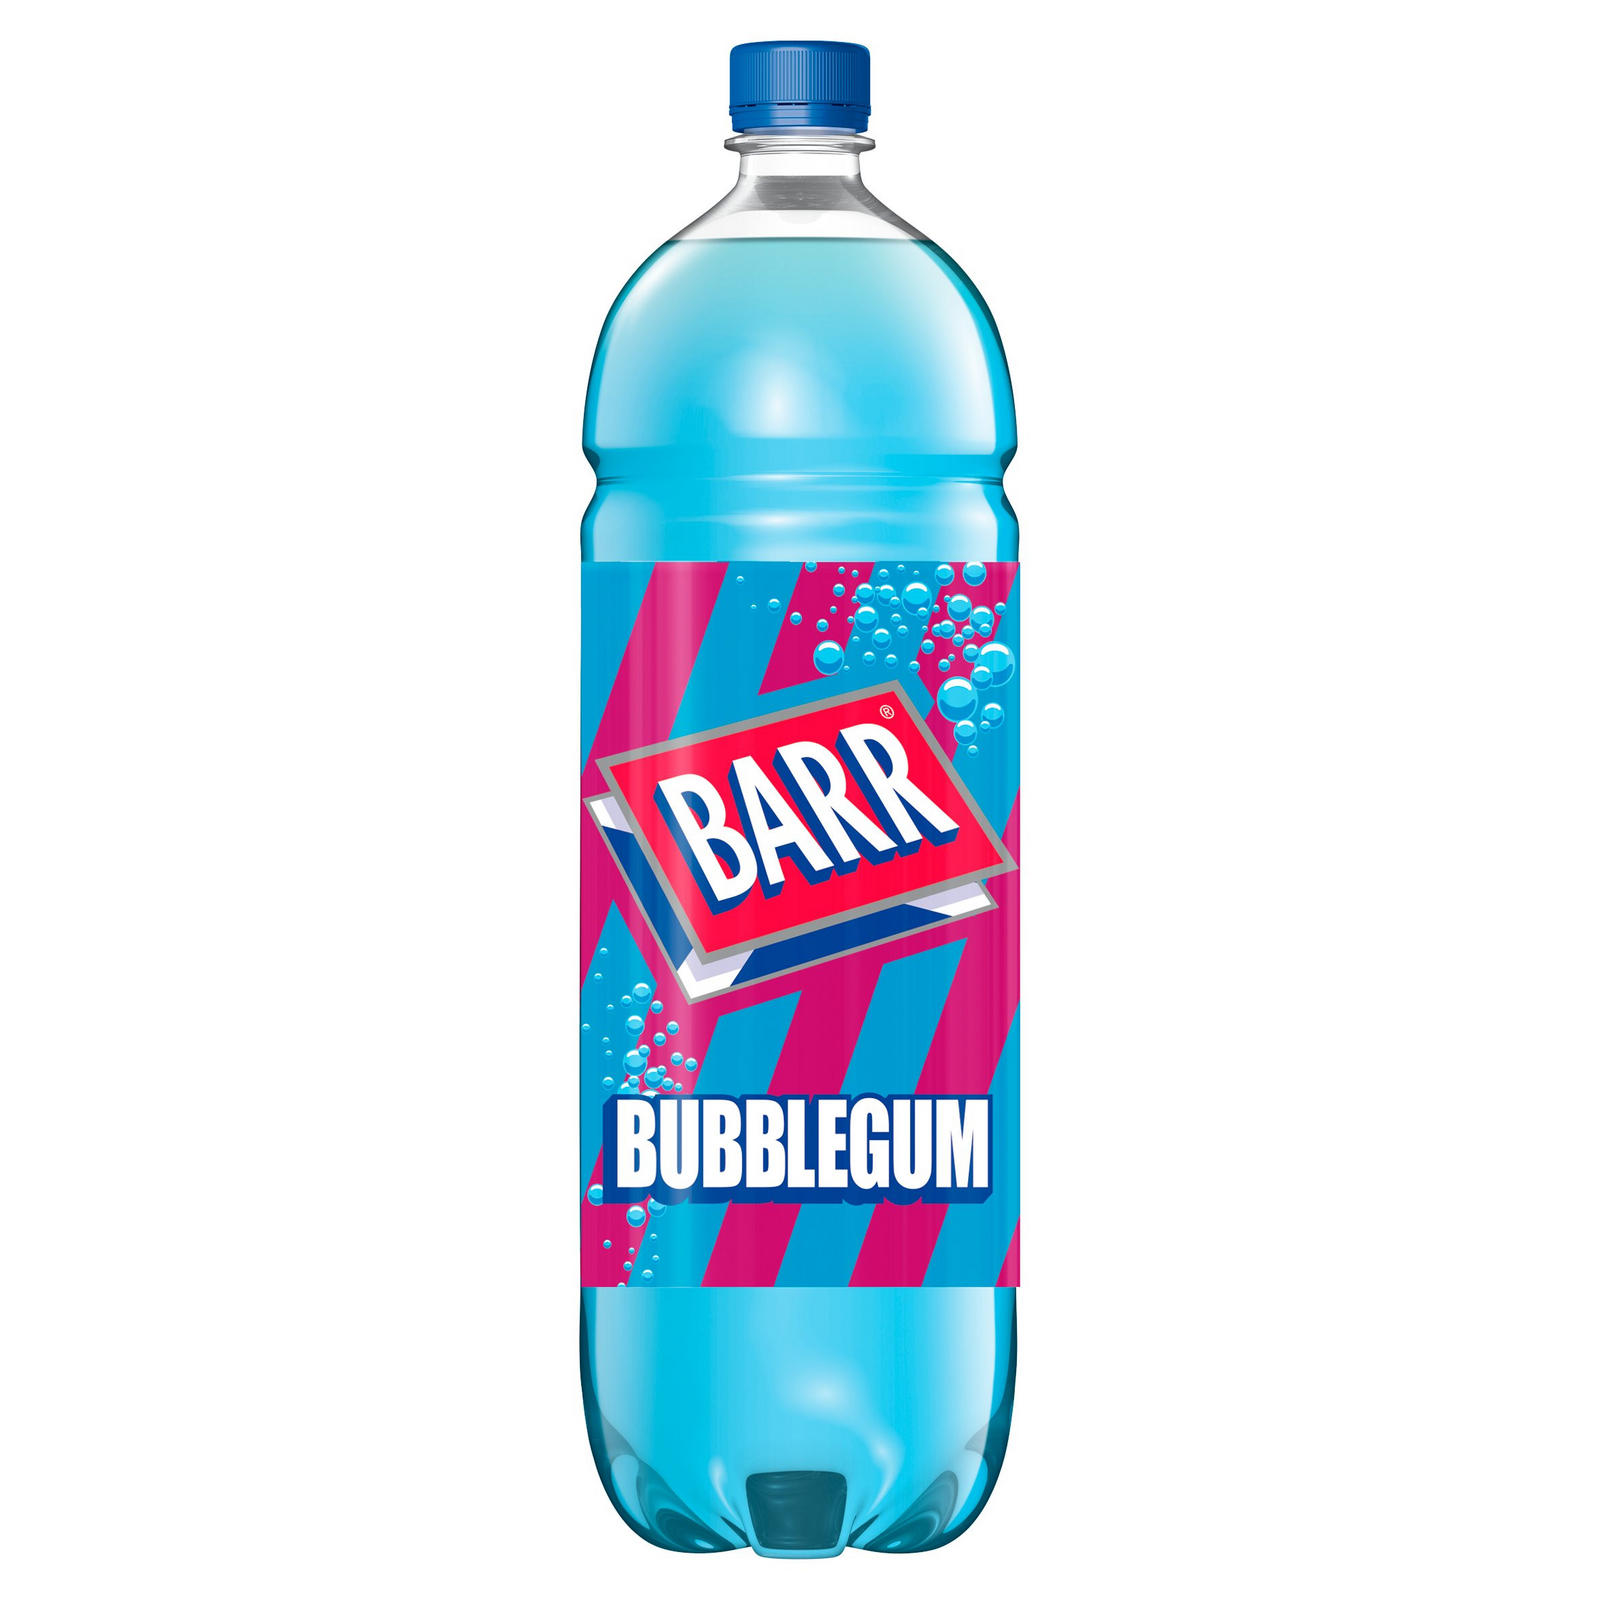 Barr Bubblegum 2 Litre Bottle Bottled Drinks Iceland Foods